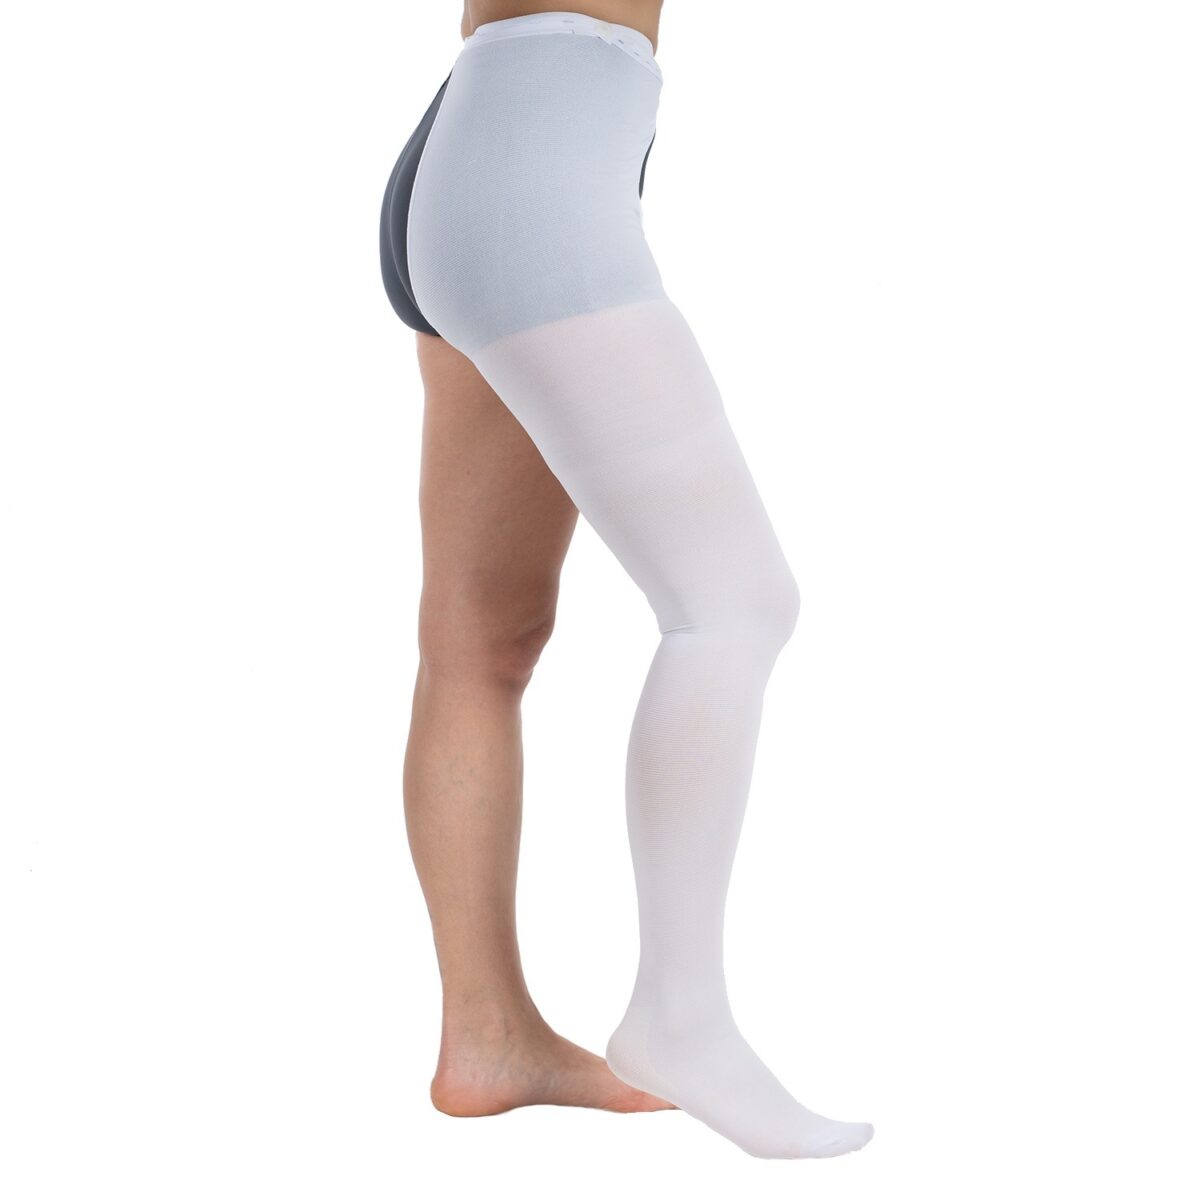 wingmed orthopedic equipments W1321 anti embolism stockings thigh high with waist belt pair 22